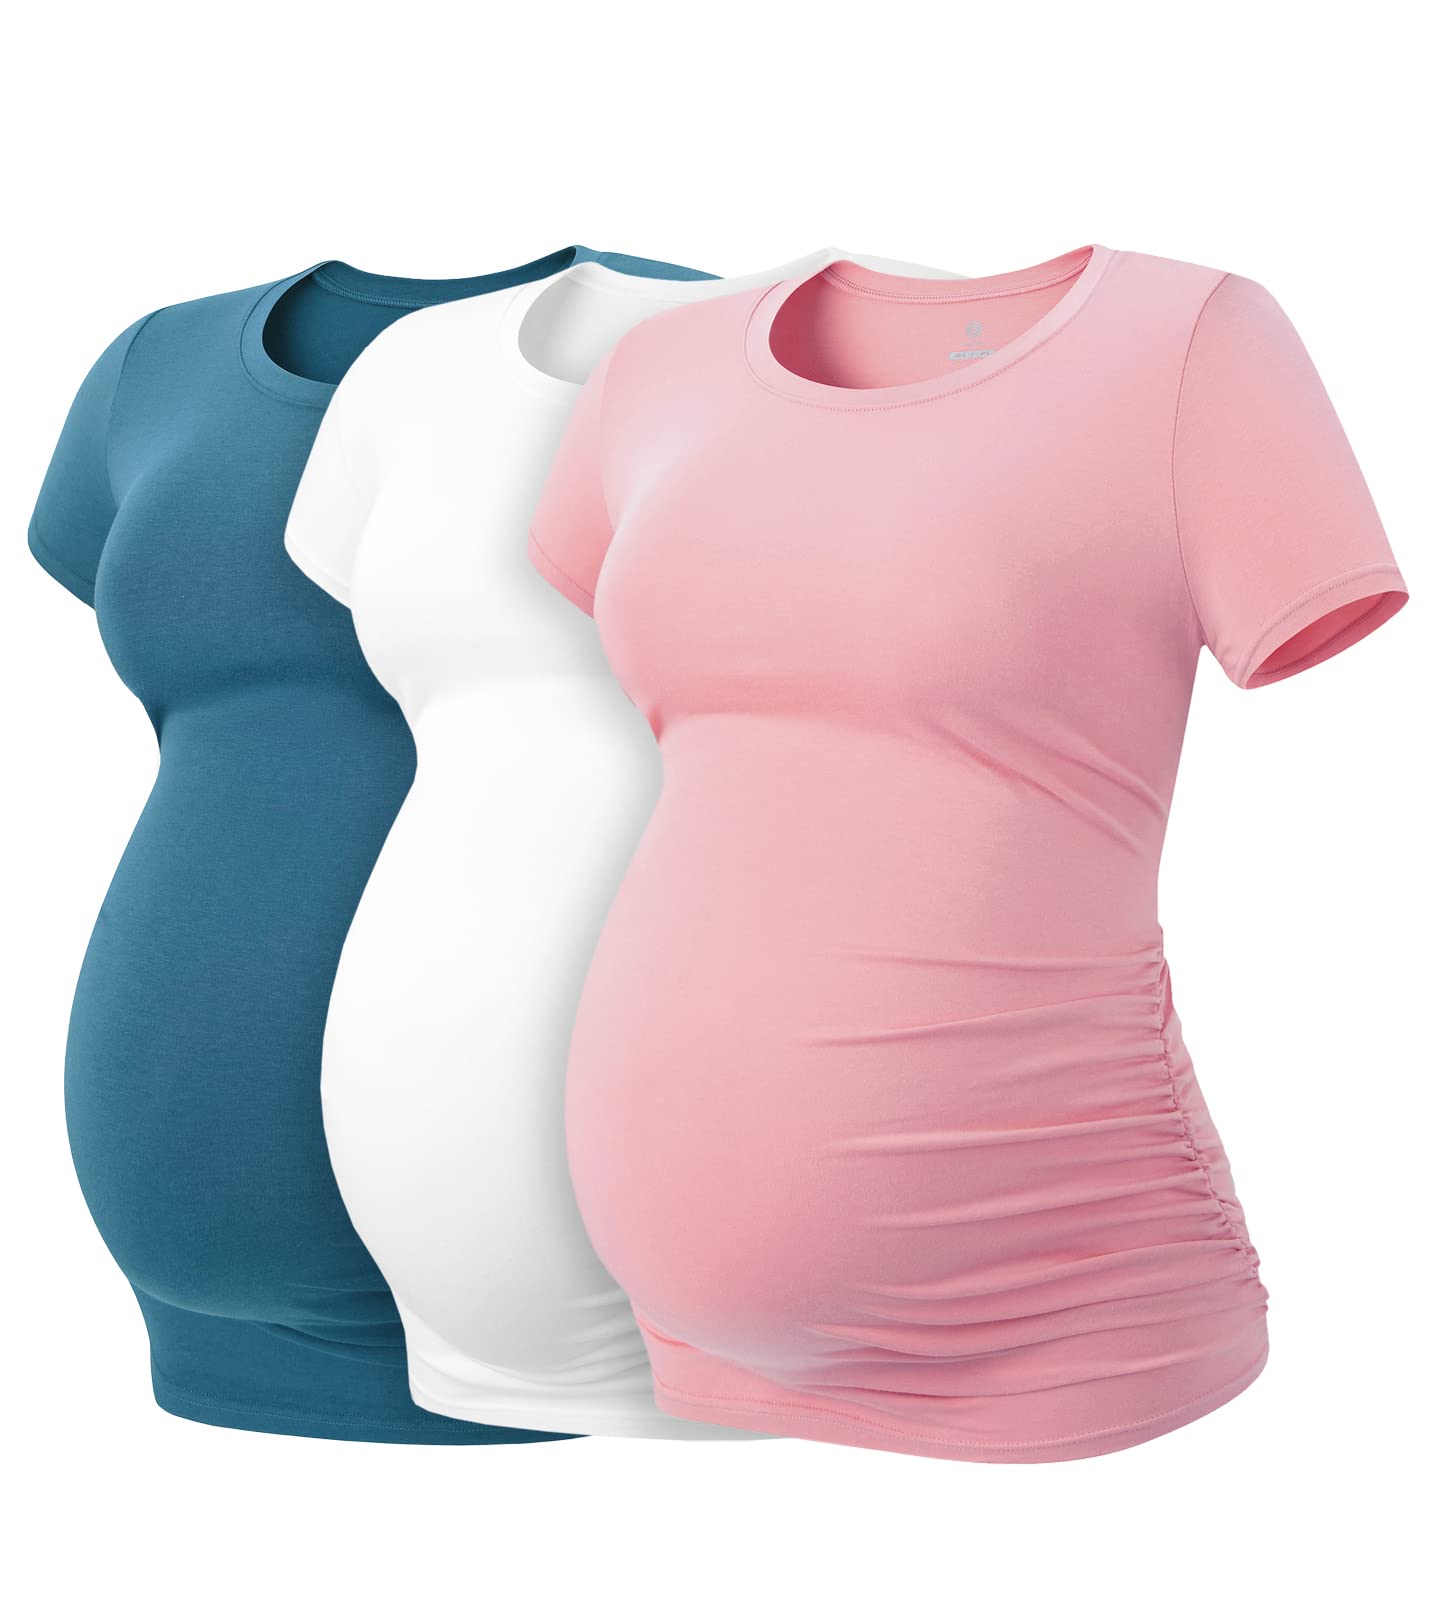 LAPASA Women's Maternity Tops Soft Modal Cotton Pregnancy Tshirts